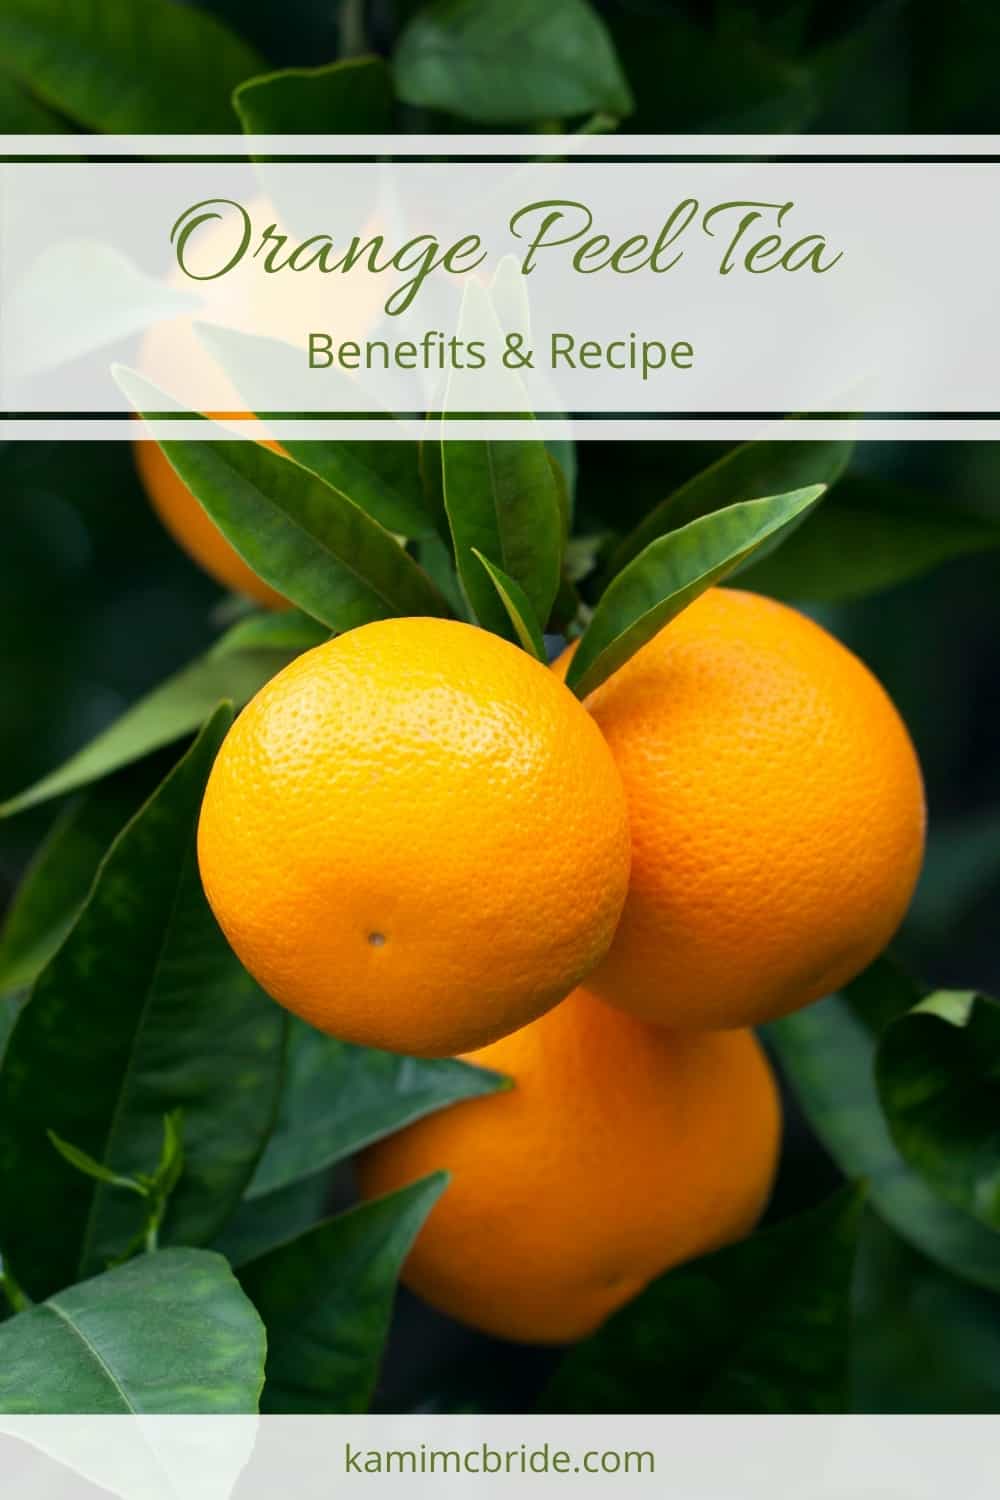 Orange Peel Tea: Benefits & Recipe